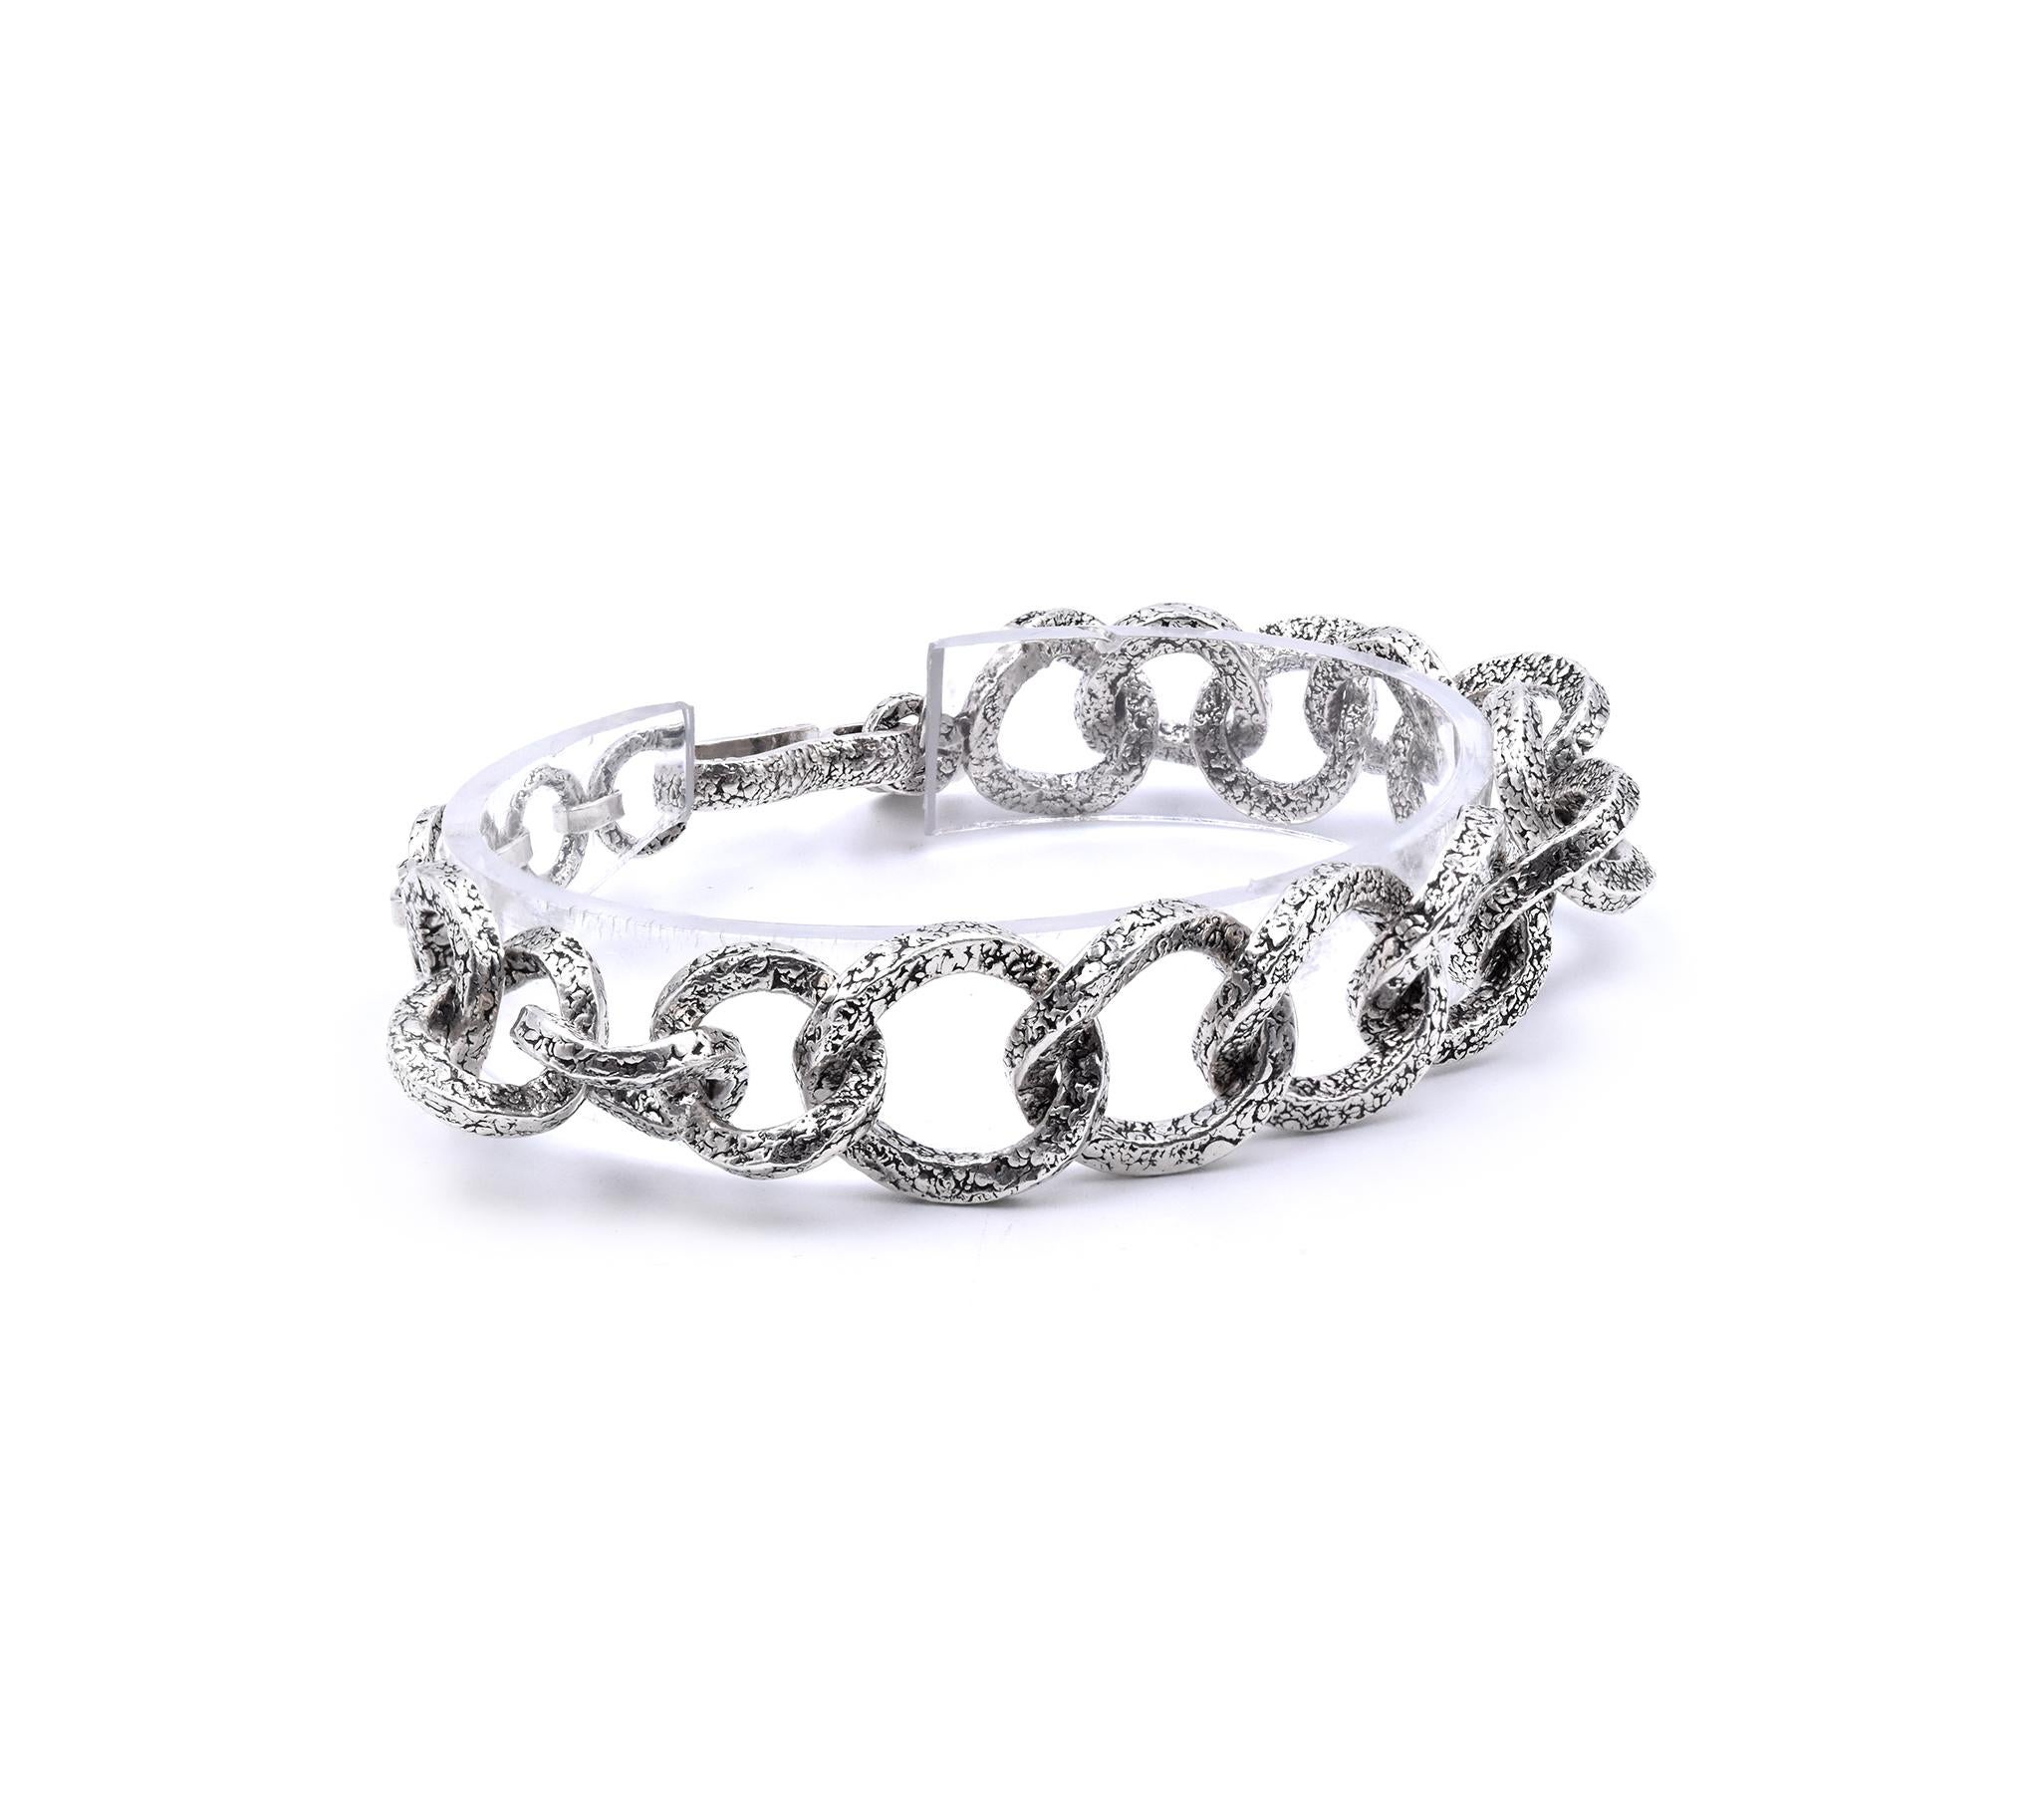 Designer: Tanj
Material: sterling silver
Weight: 39.38 grams
Measurements: bracelet measures 8-inches long
